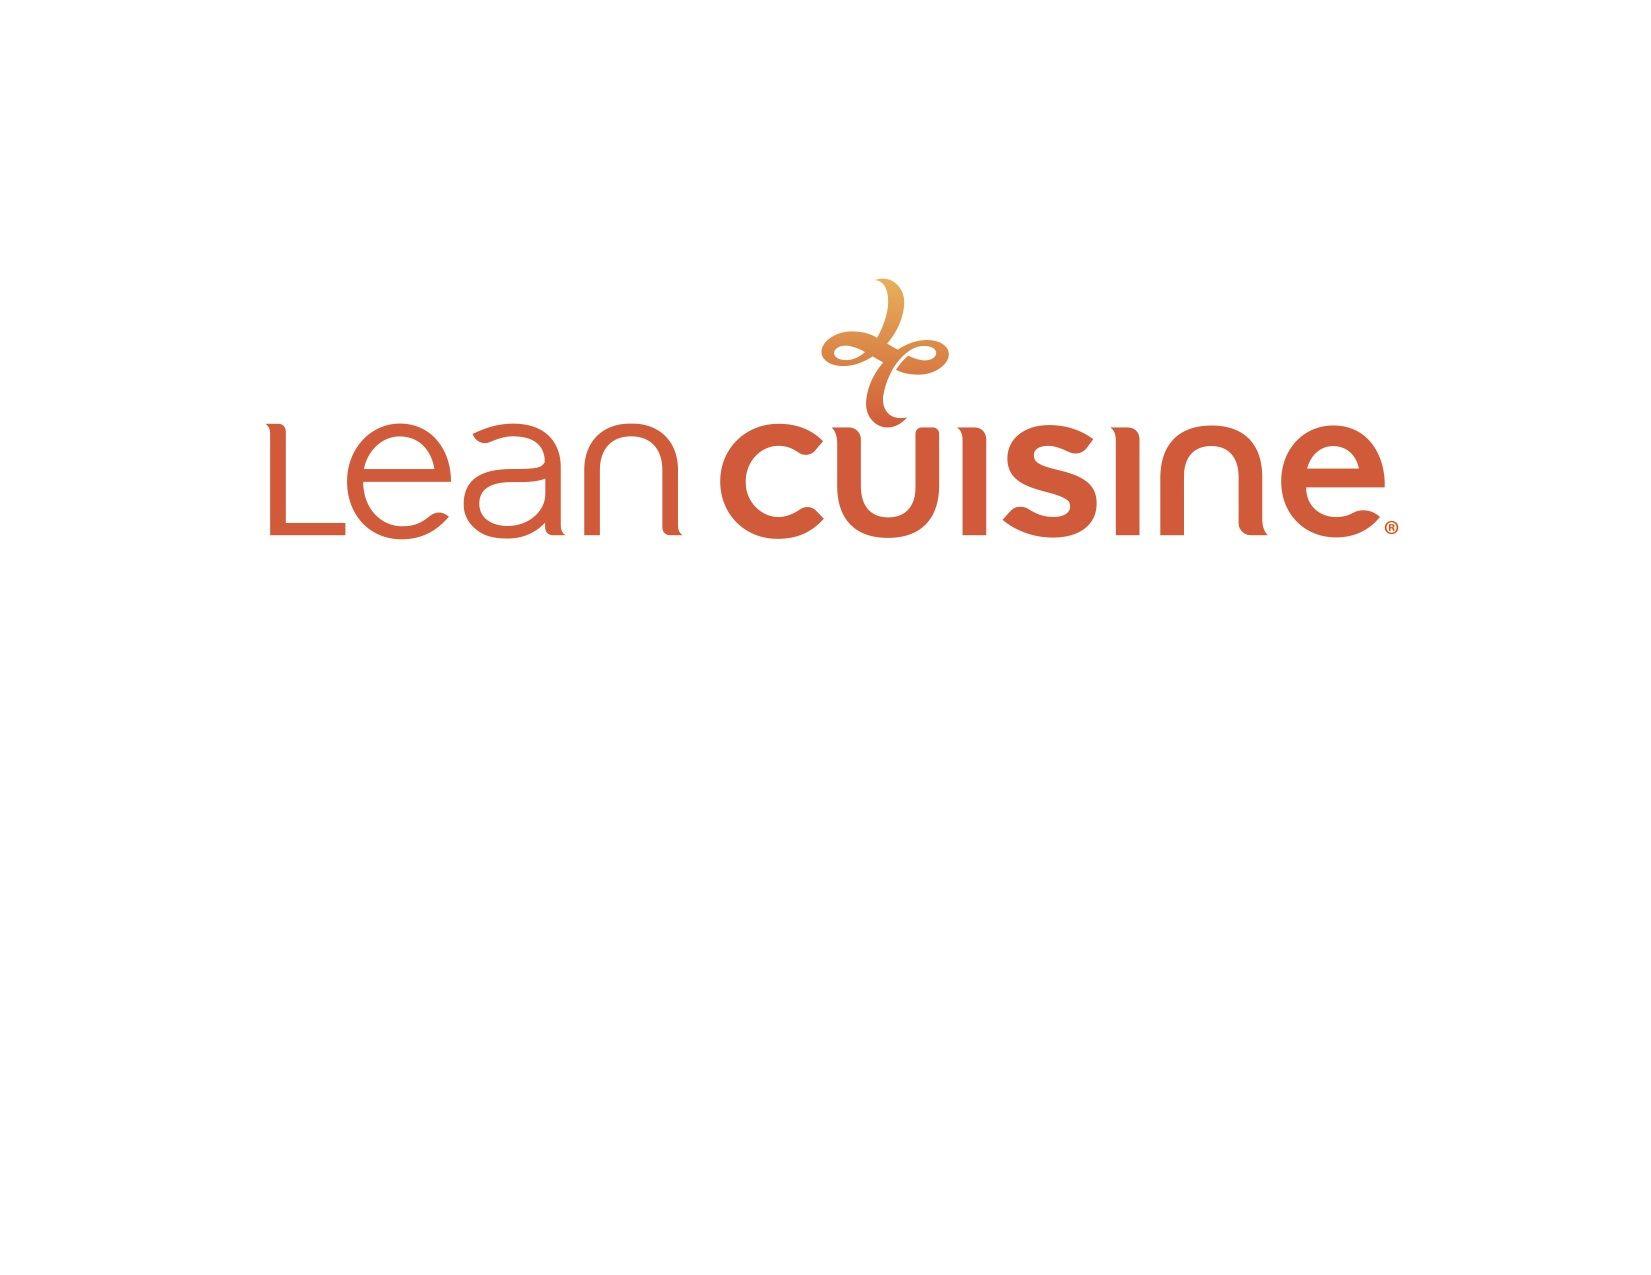 Cuisine Logo - Lean Cuisine logo - Girls Leadership